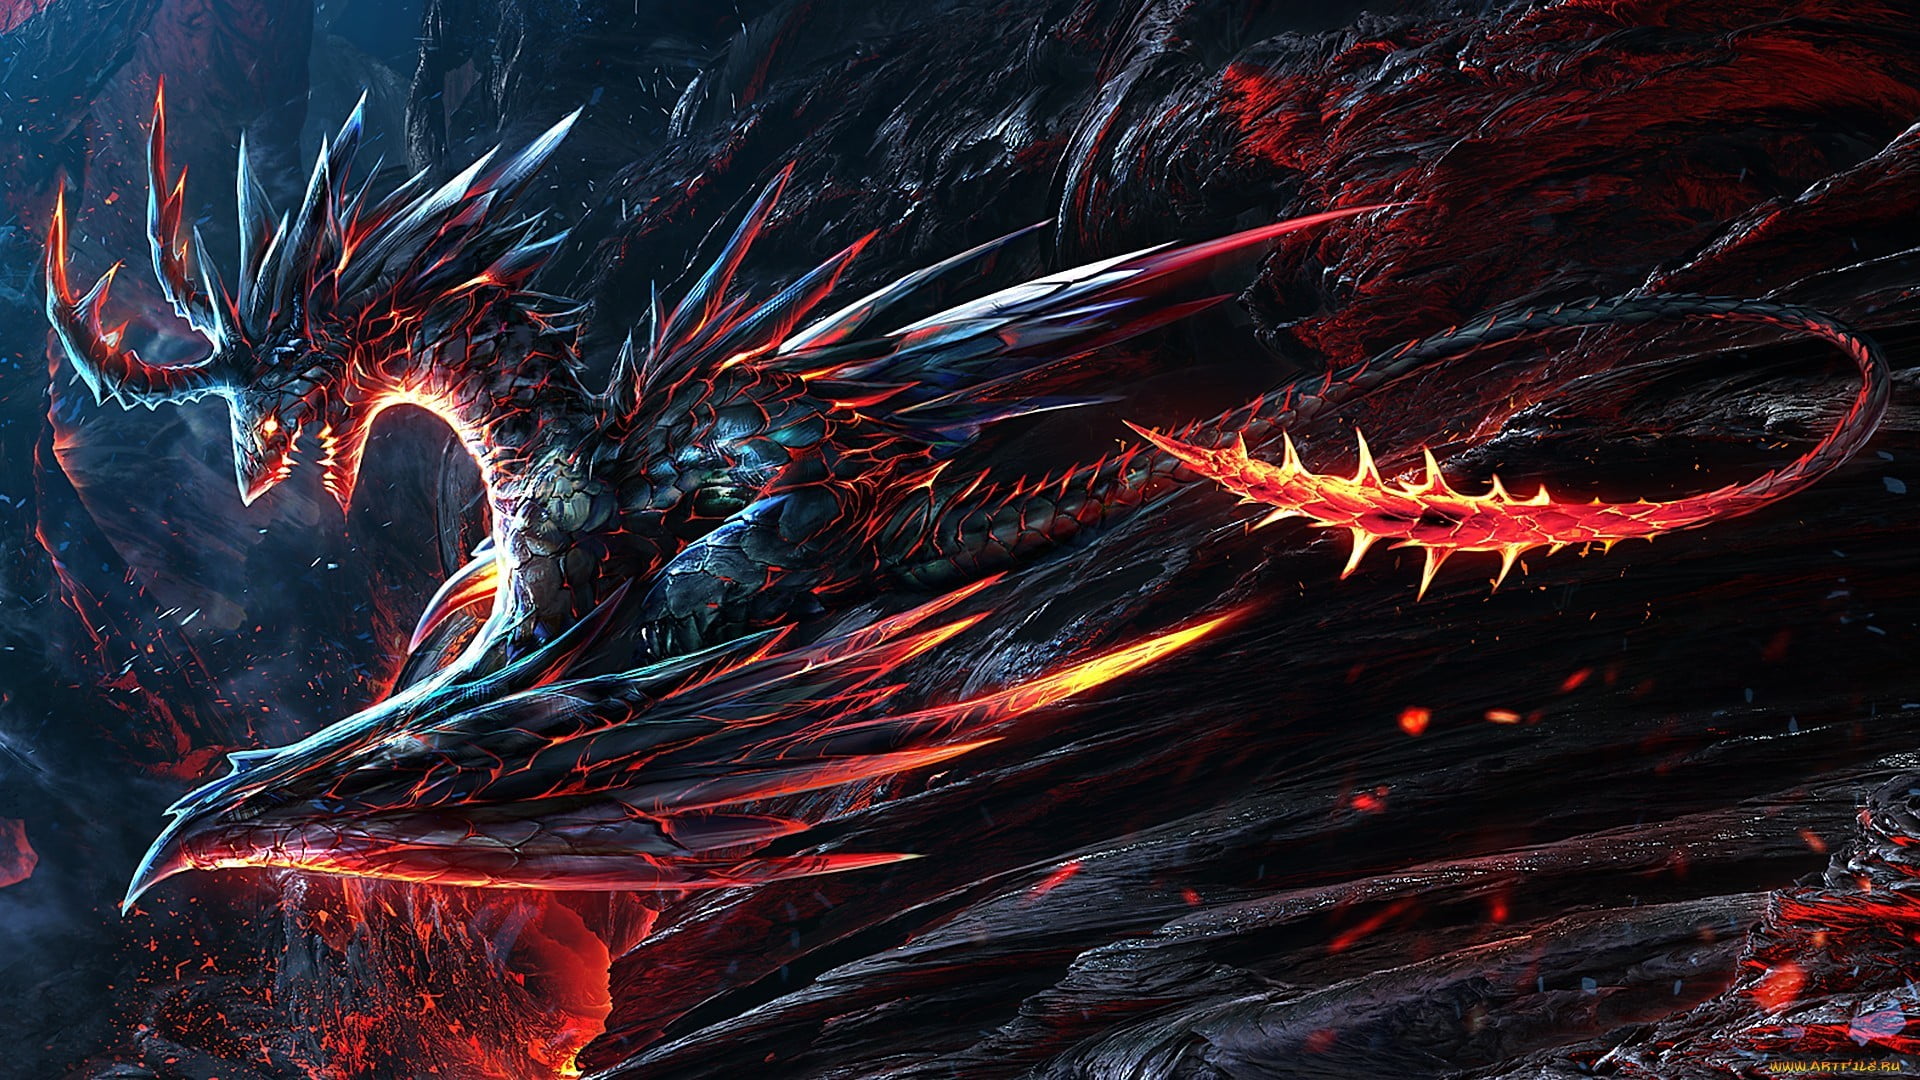 Background Full HD 1080p Wallpaper dragon pattern red black